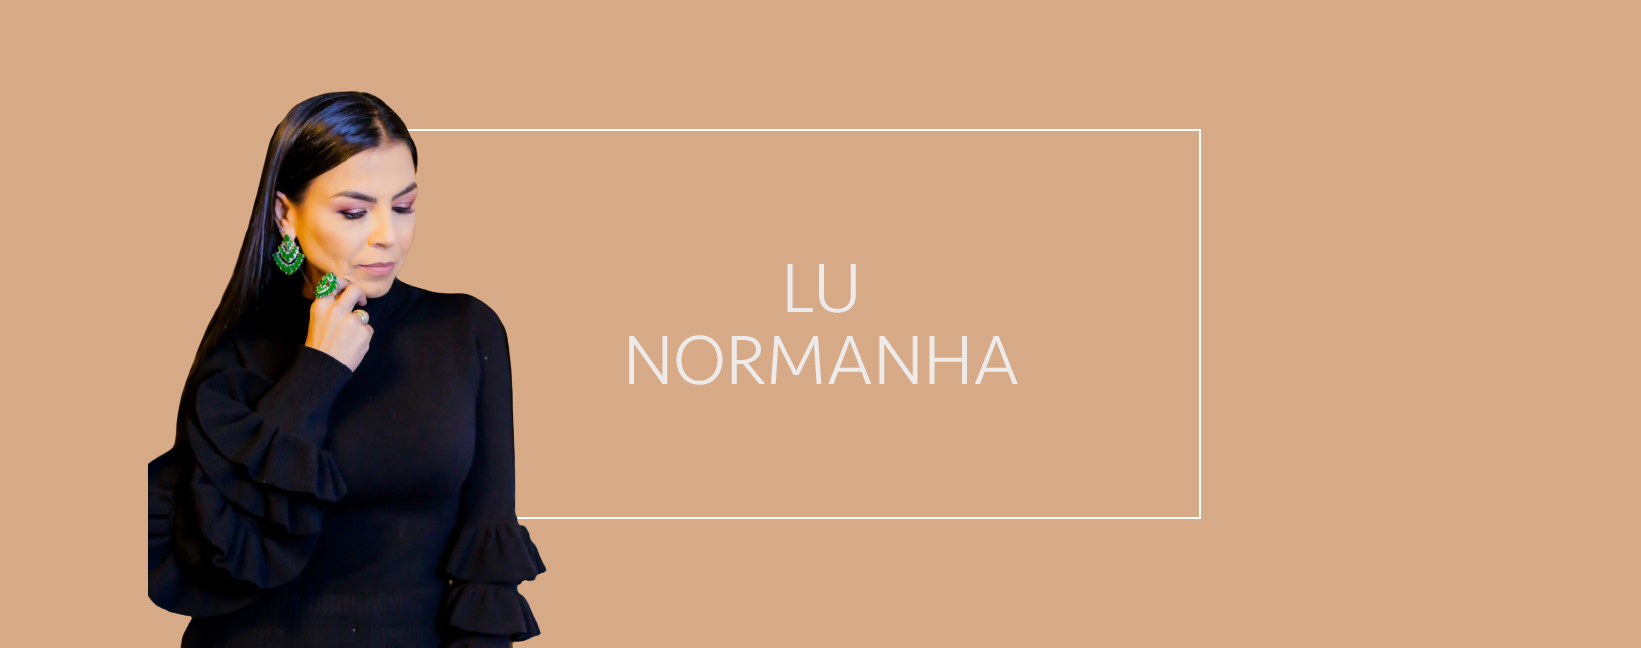 Lu Normanha